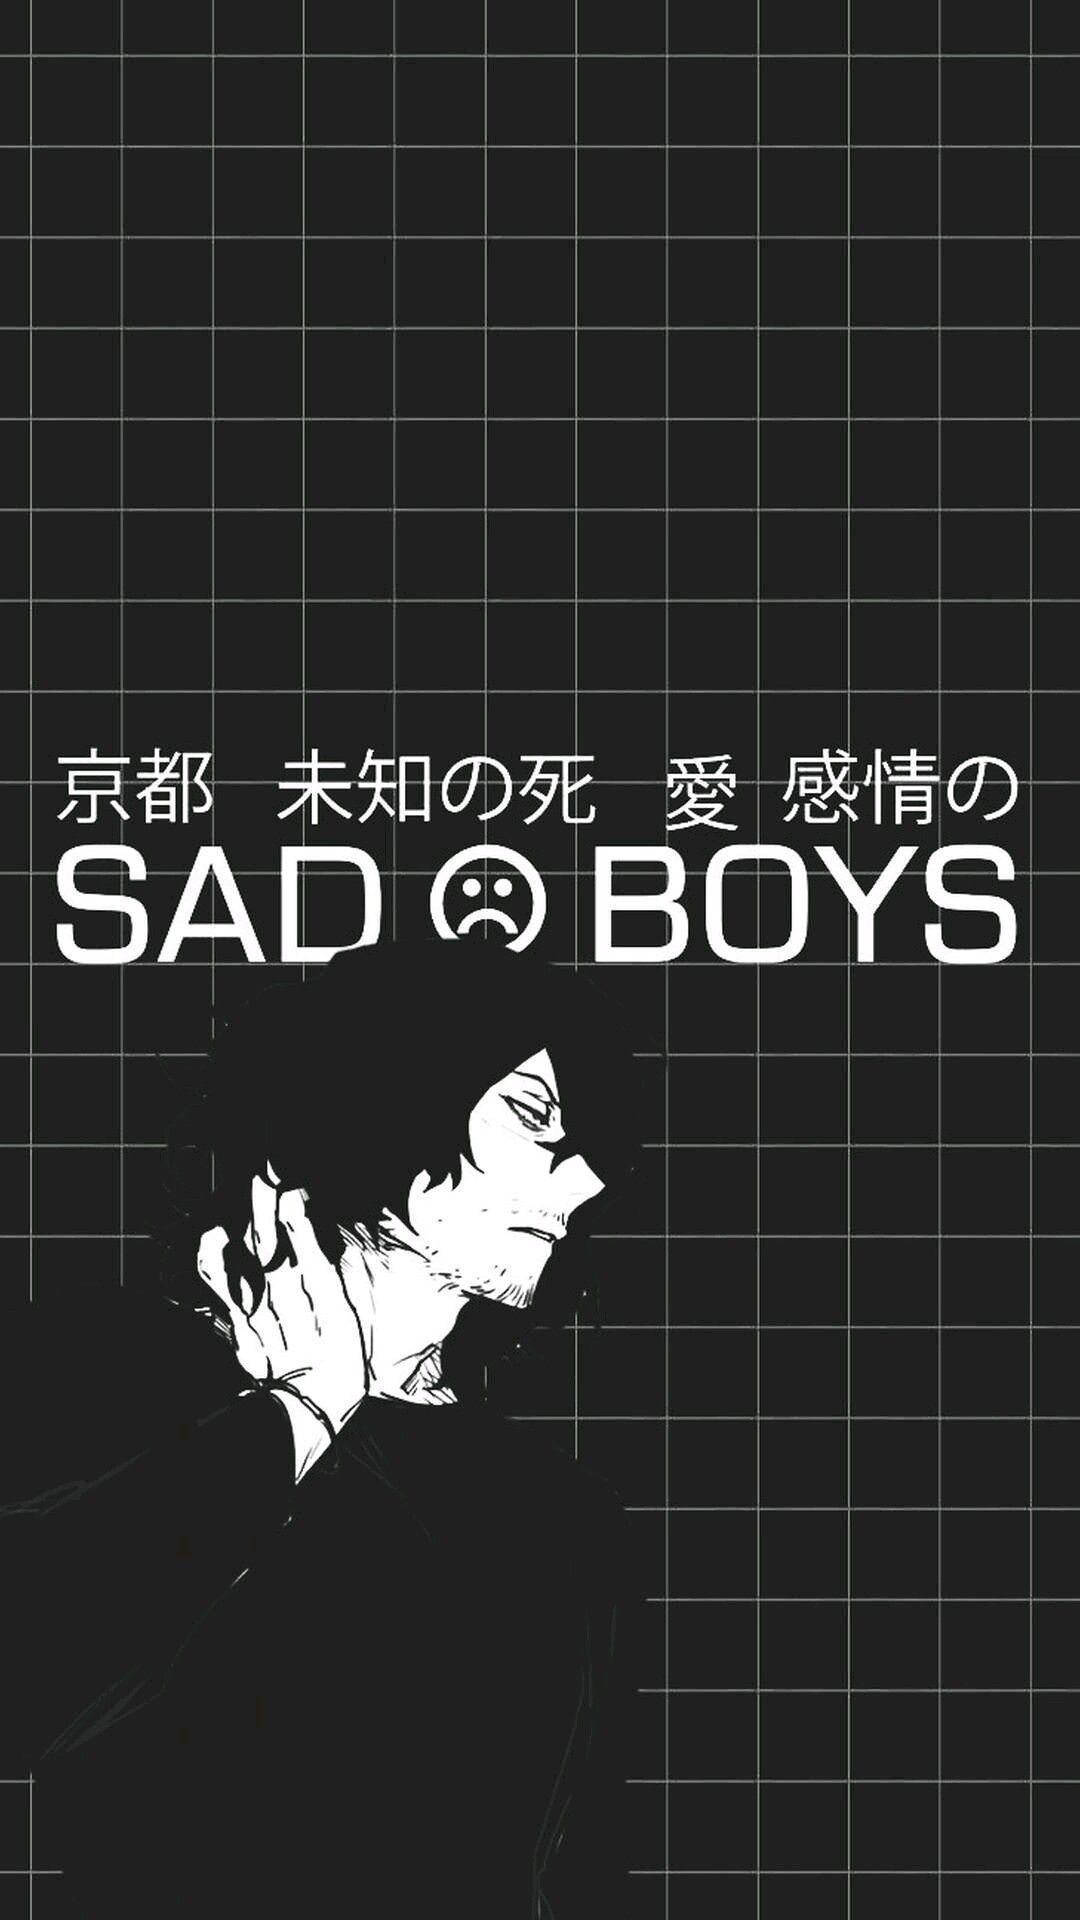 Anime Boy Sad Aesthetic Shota Aizawa Background